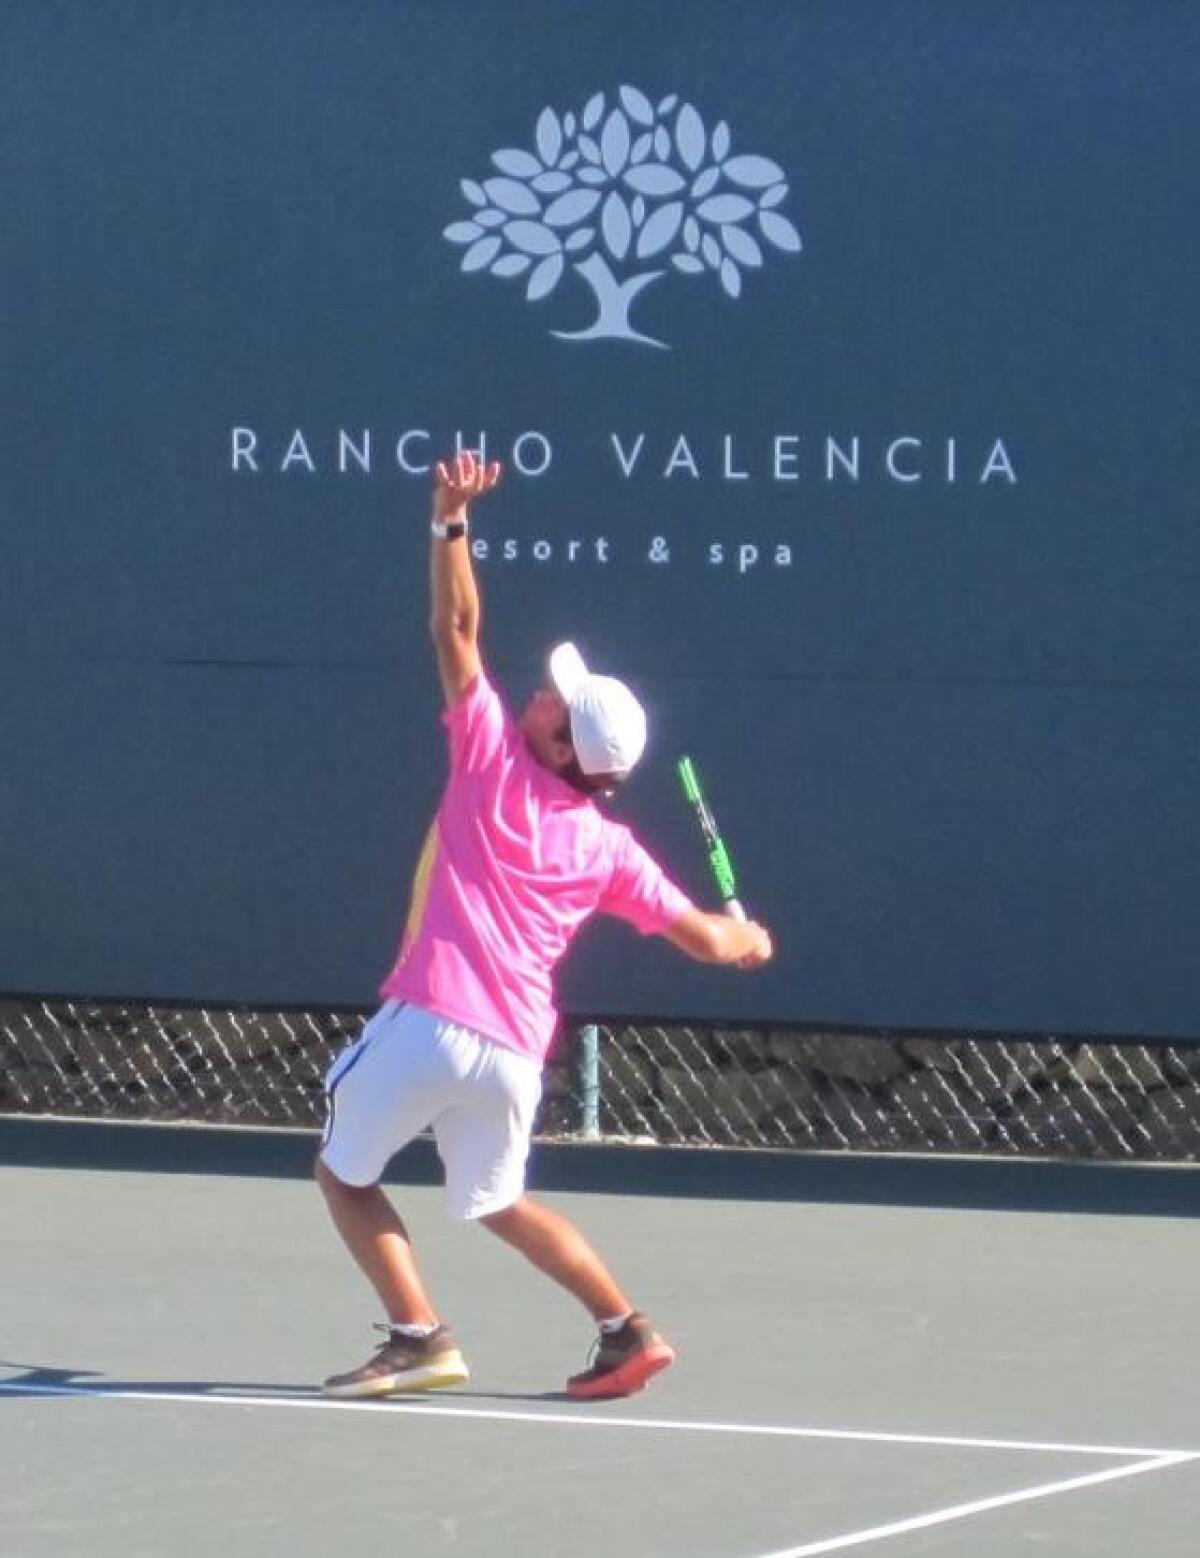 The tennis tournament at Rancho Valencia Resort & Spa 